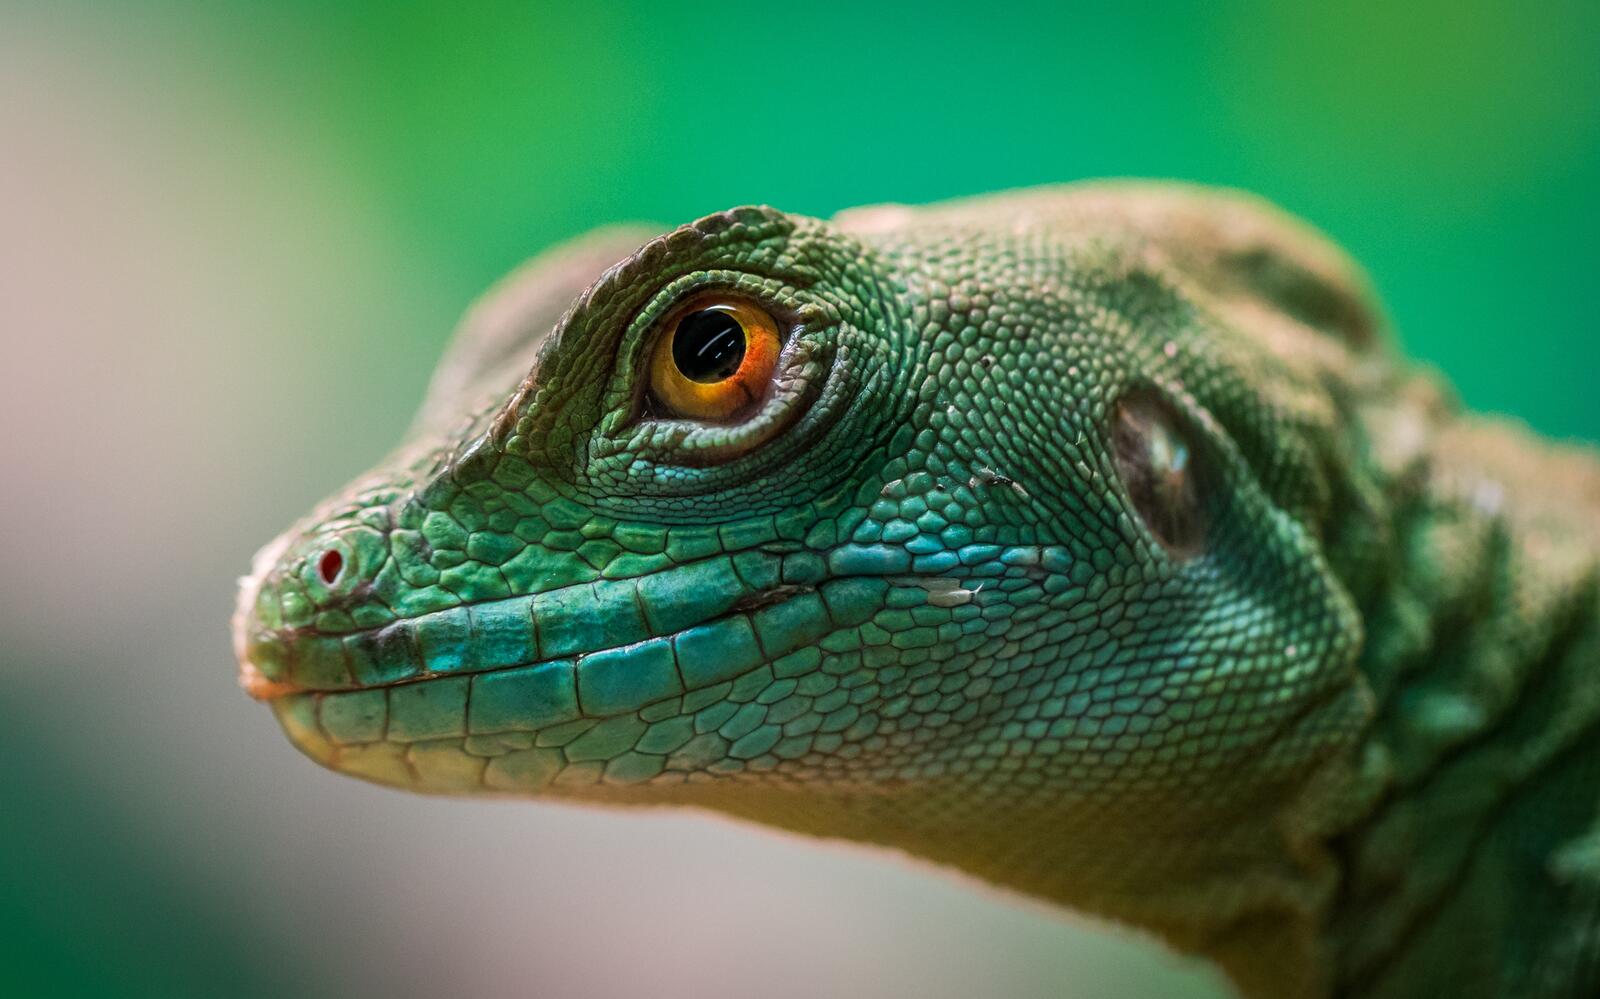 Wallpapers lizard reptile animal on the desktop